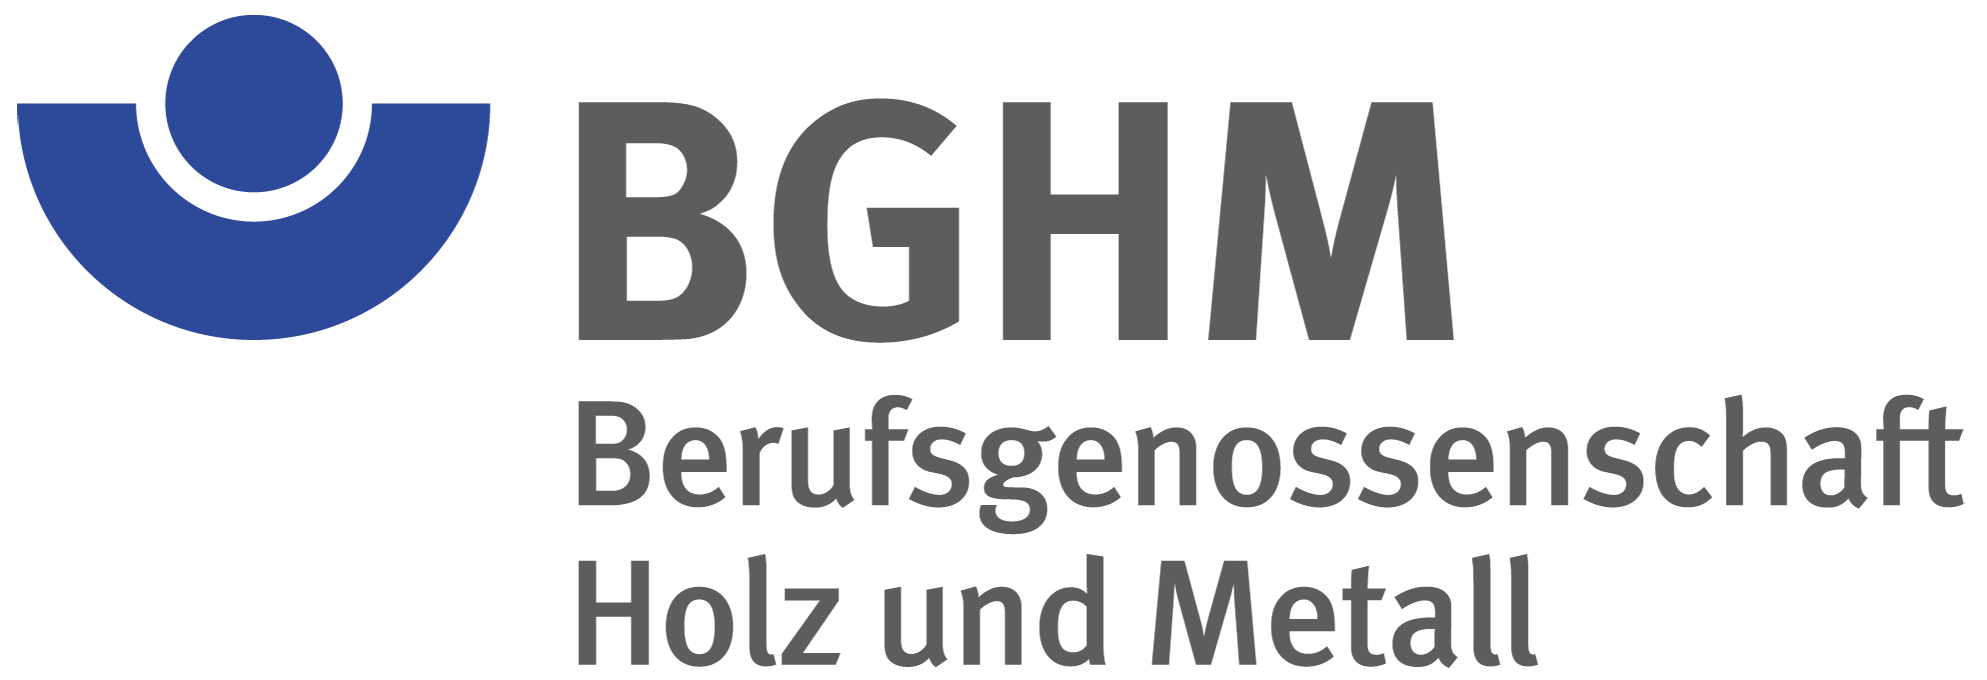 Logo_BGHM_dpi.png